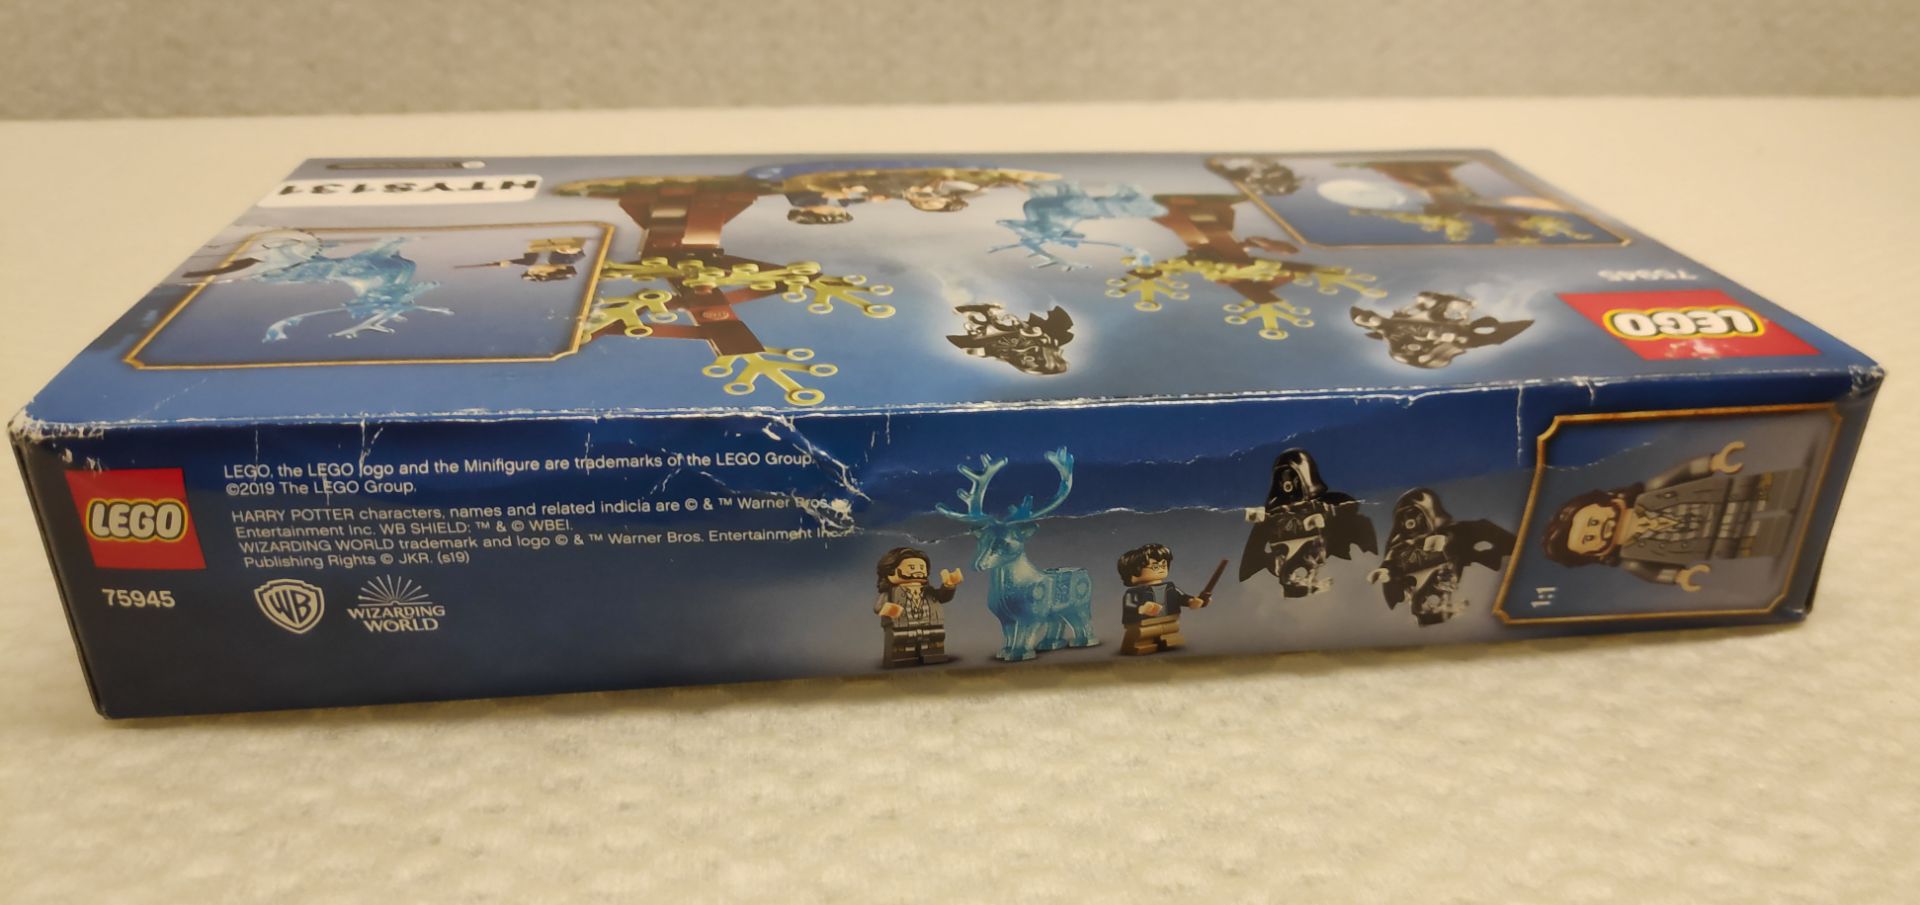 1 x Lego Harry Potter Expecto Patronum Set - New/Boxed - Set # 75945 - Image 10 of 10